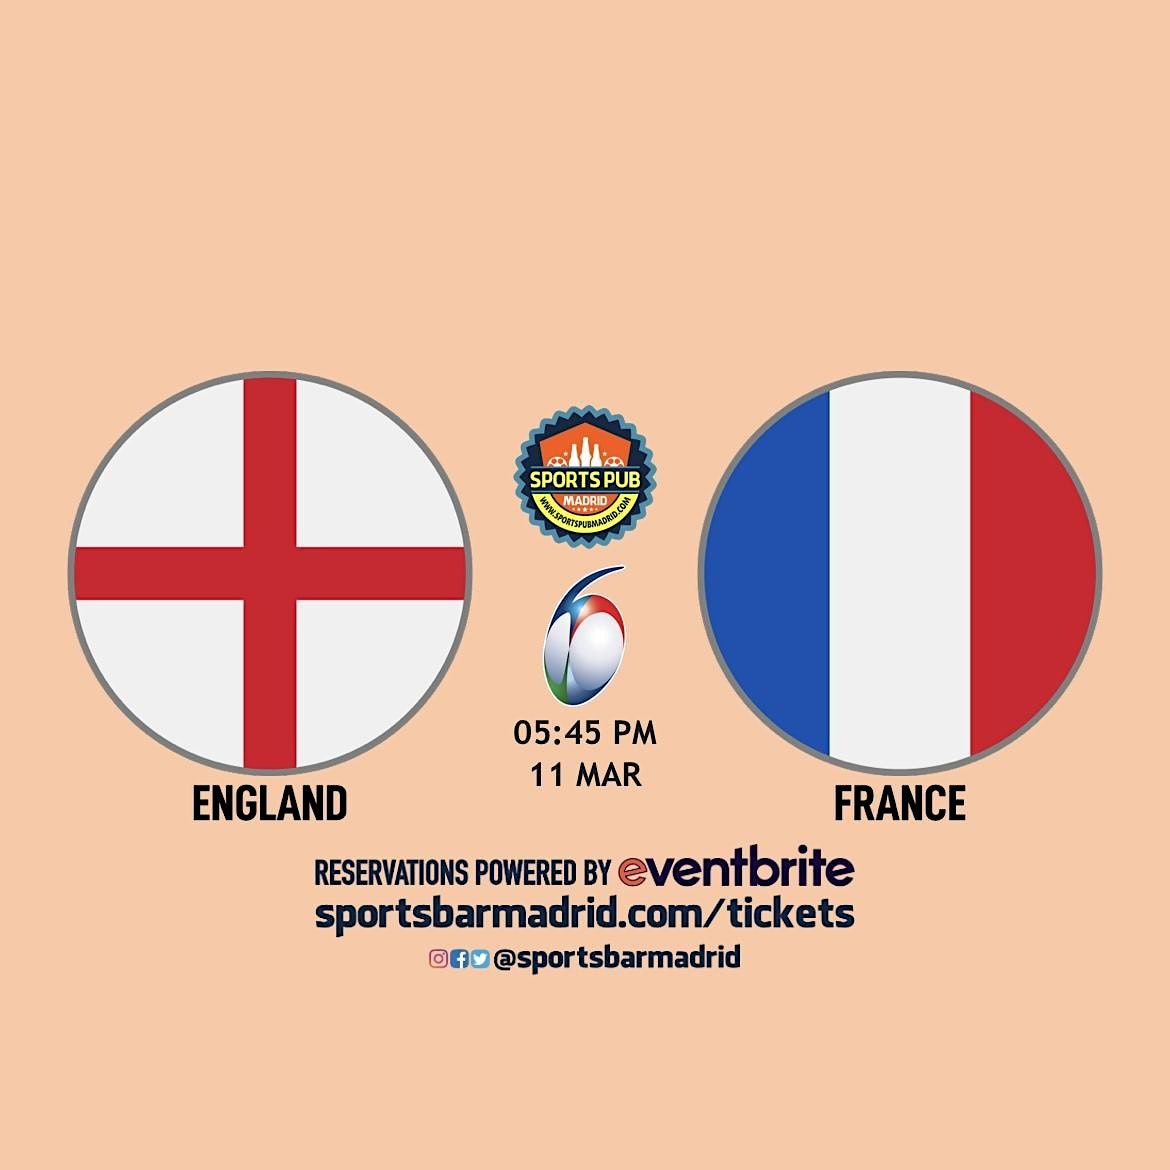 England v France | Rugby Six Nations - Sports Pub San Mateo